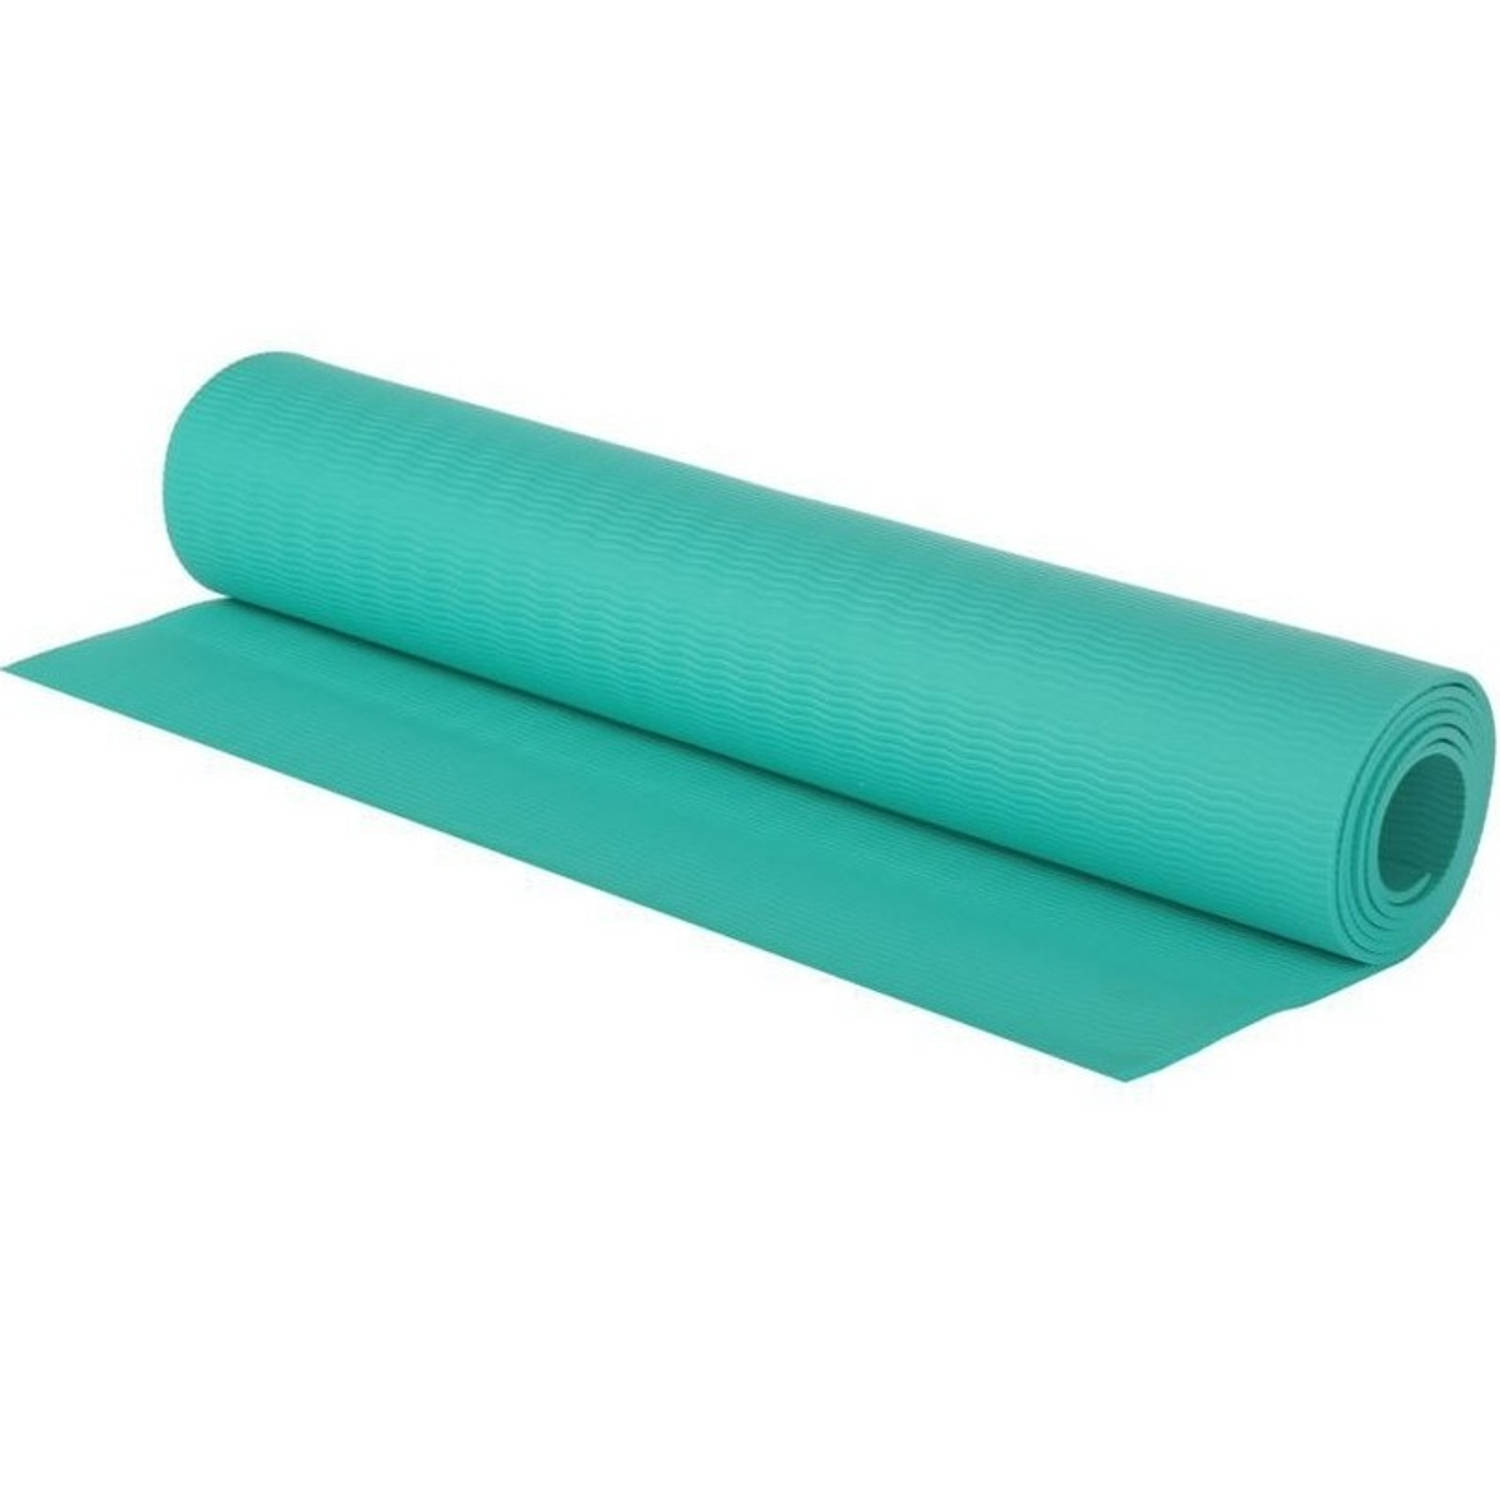 Turquoise Blauwe Yogamat-sportmat 180 X 60 Cm Sportmatten Voor O.a. Yoga, Pilates En Fitness